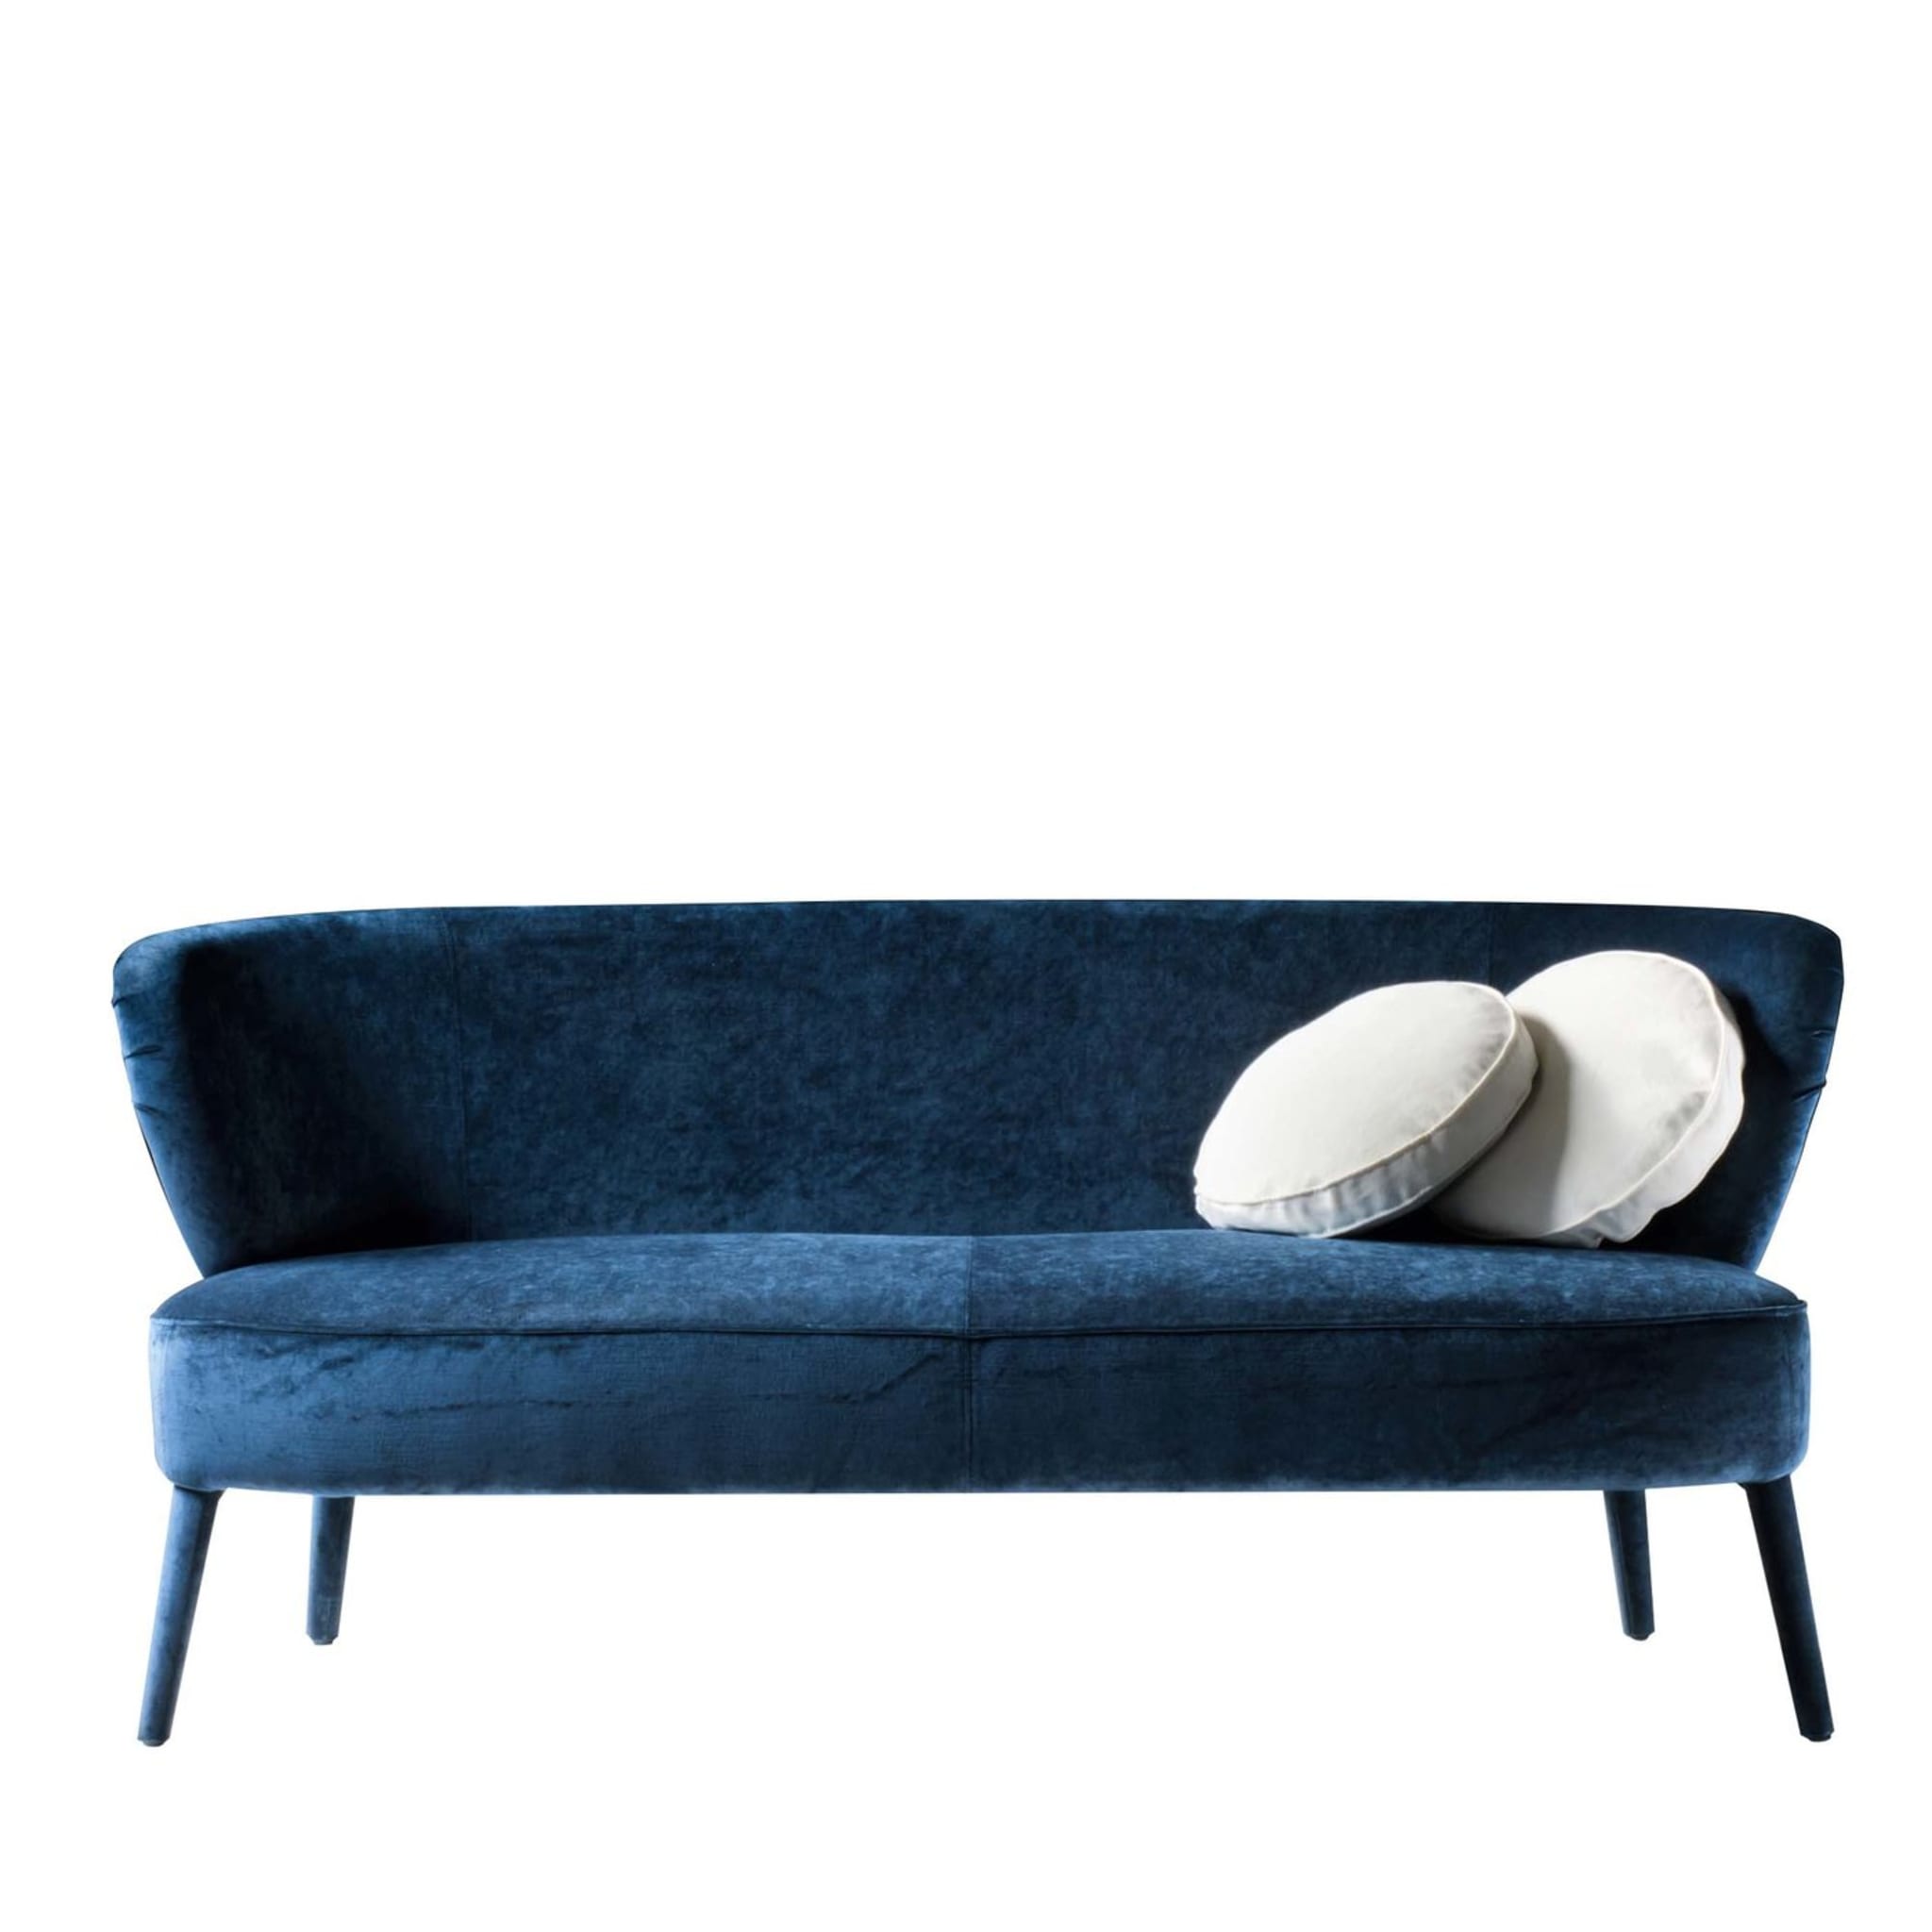 Cloé Blue Sofa - Main view